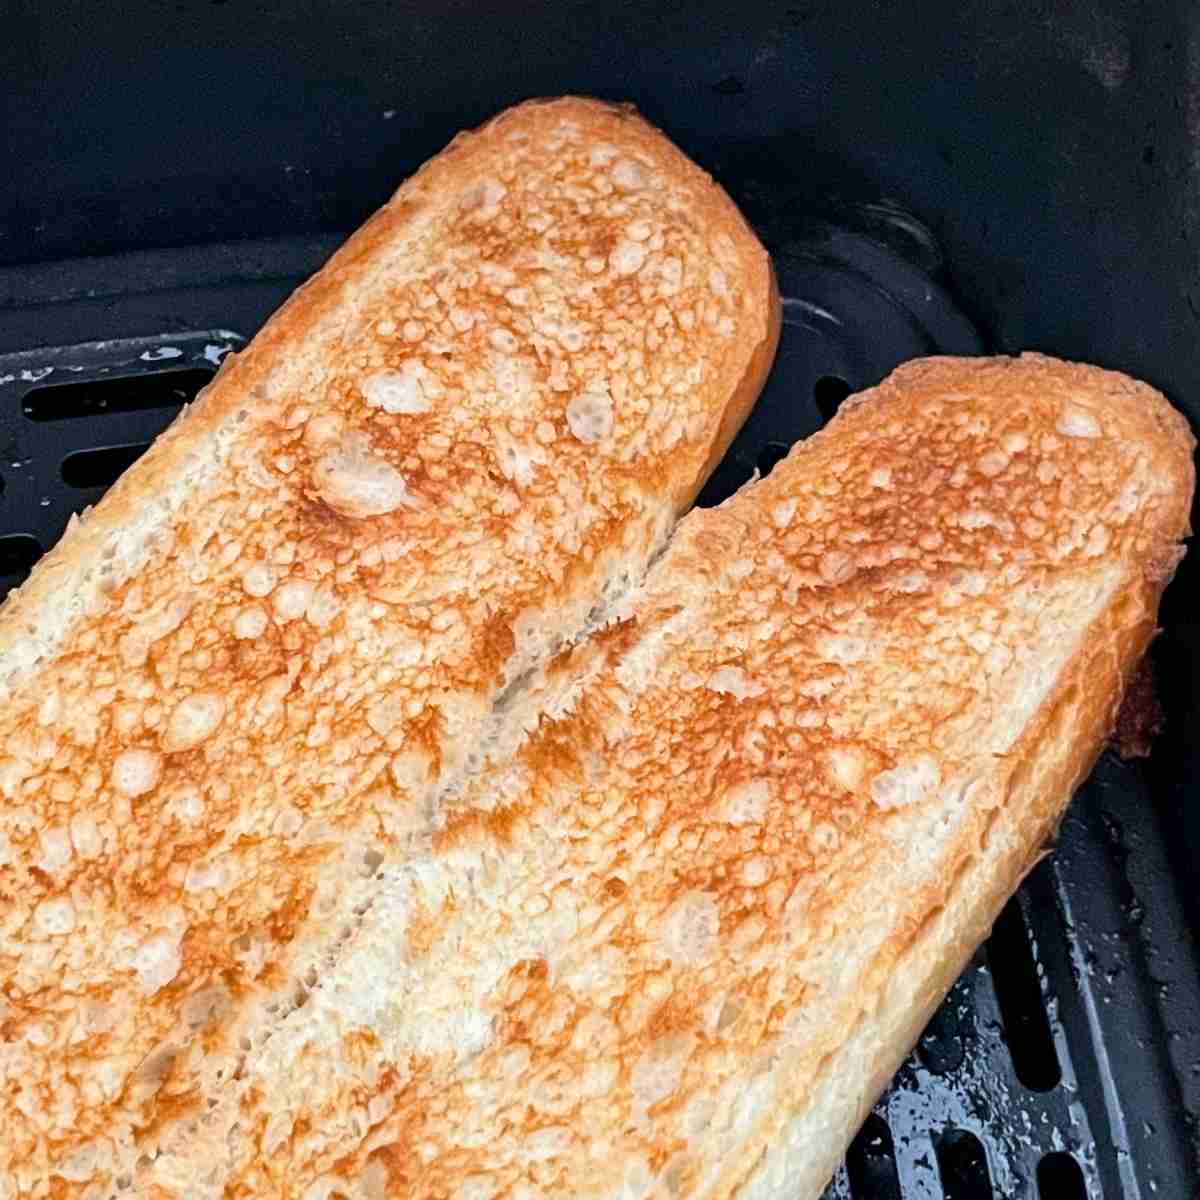 Toast hoagie roll in an air fryer